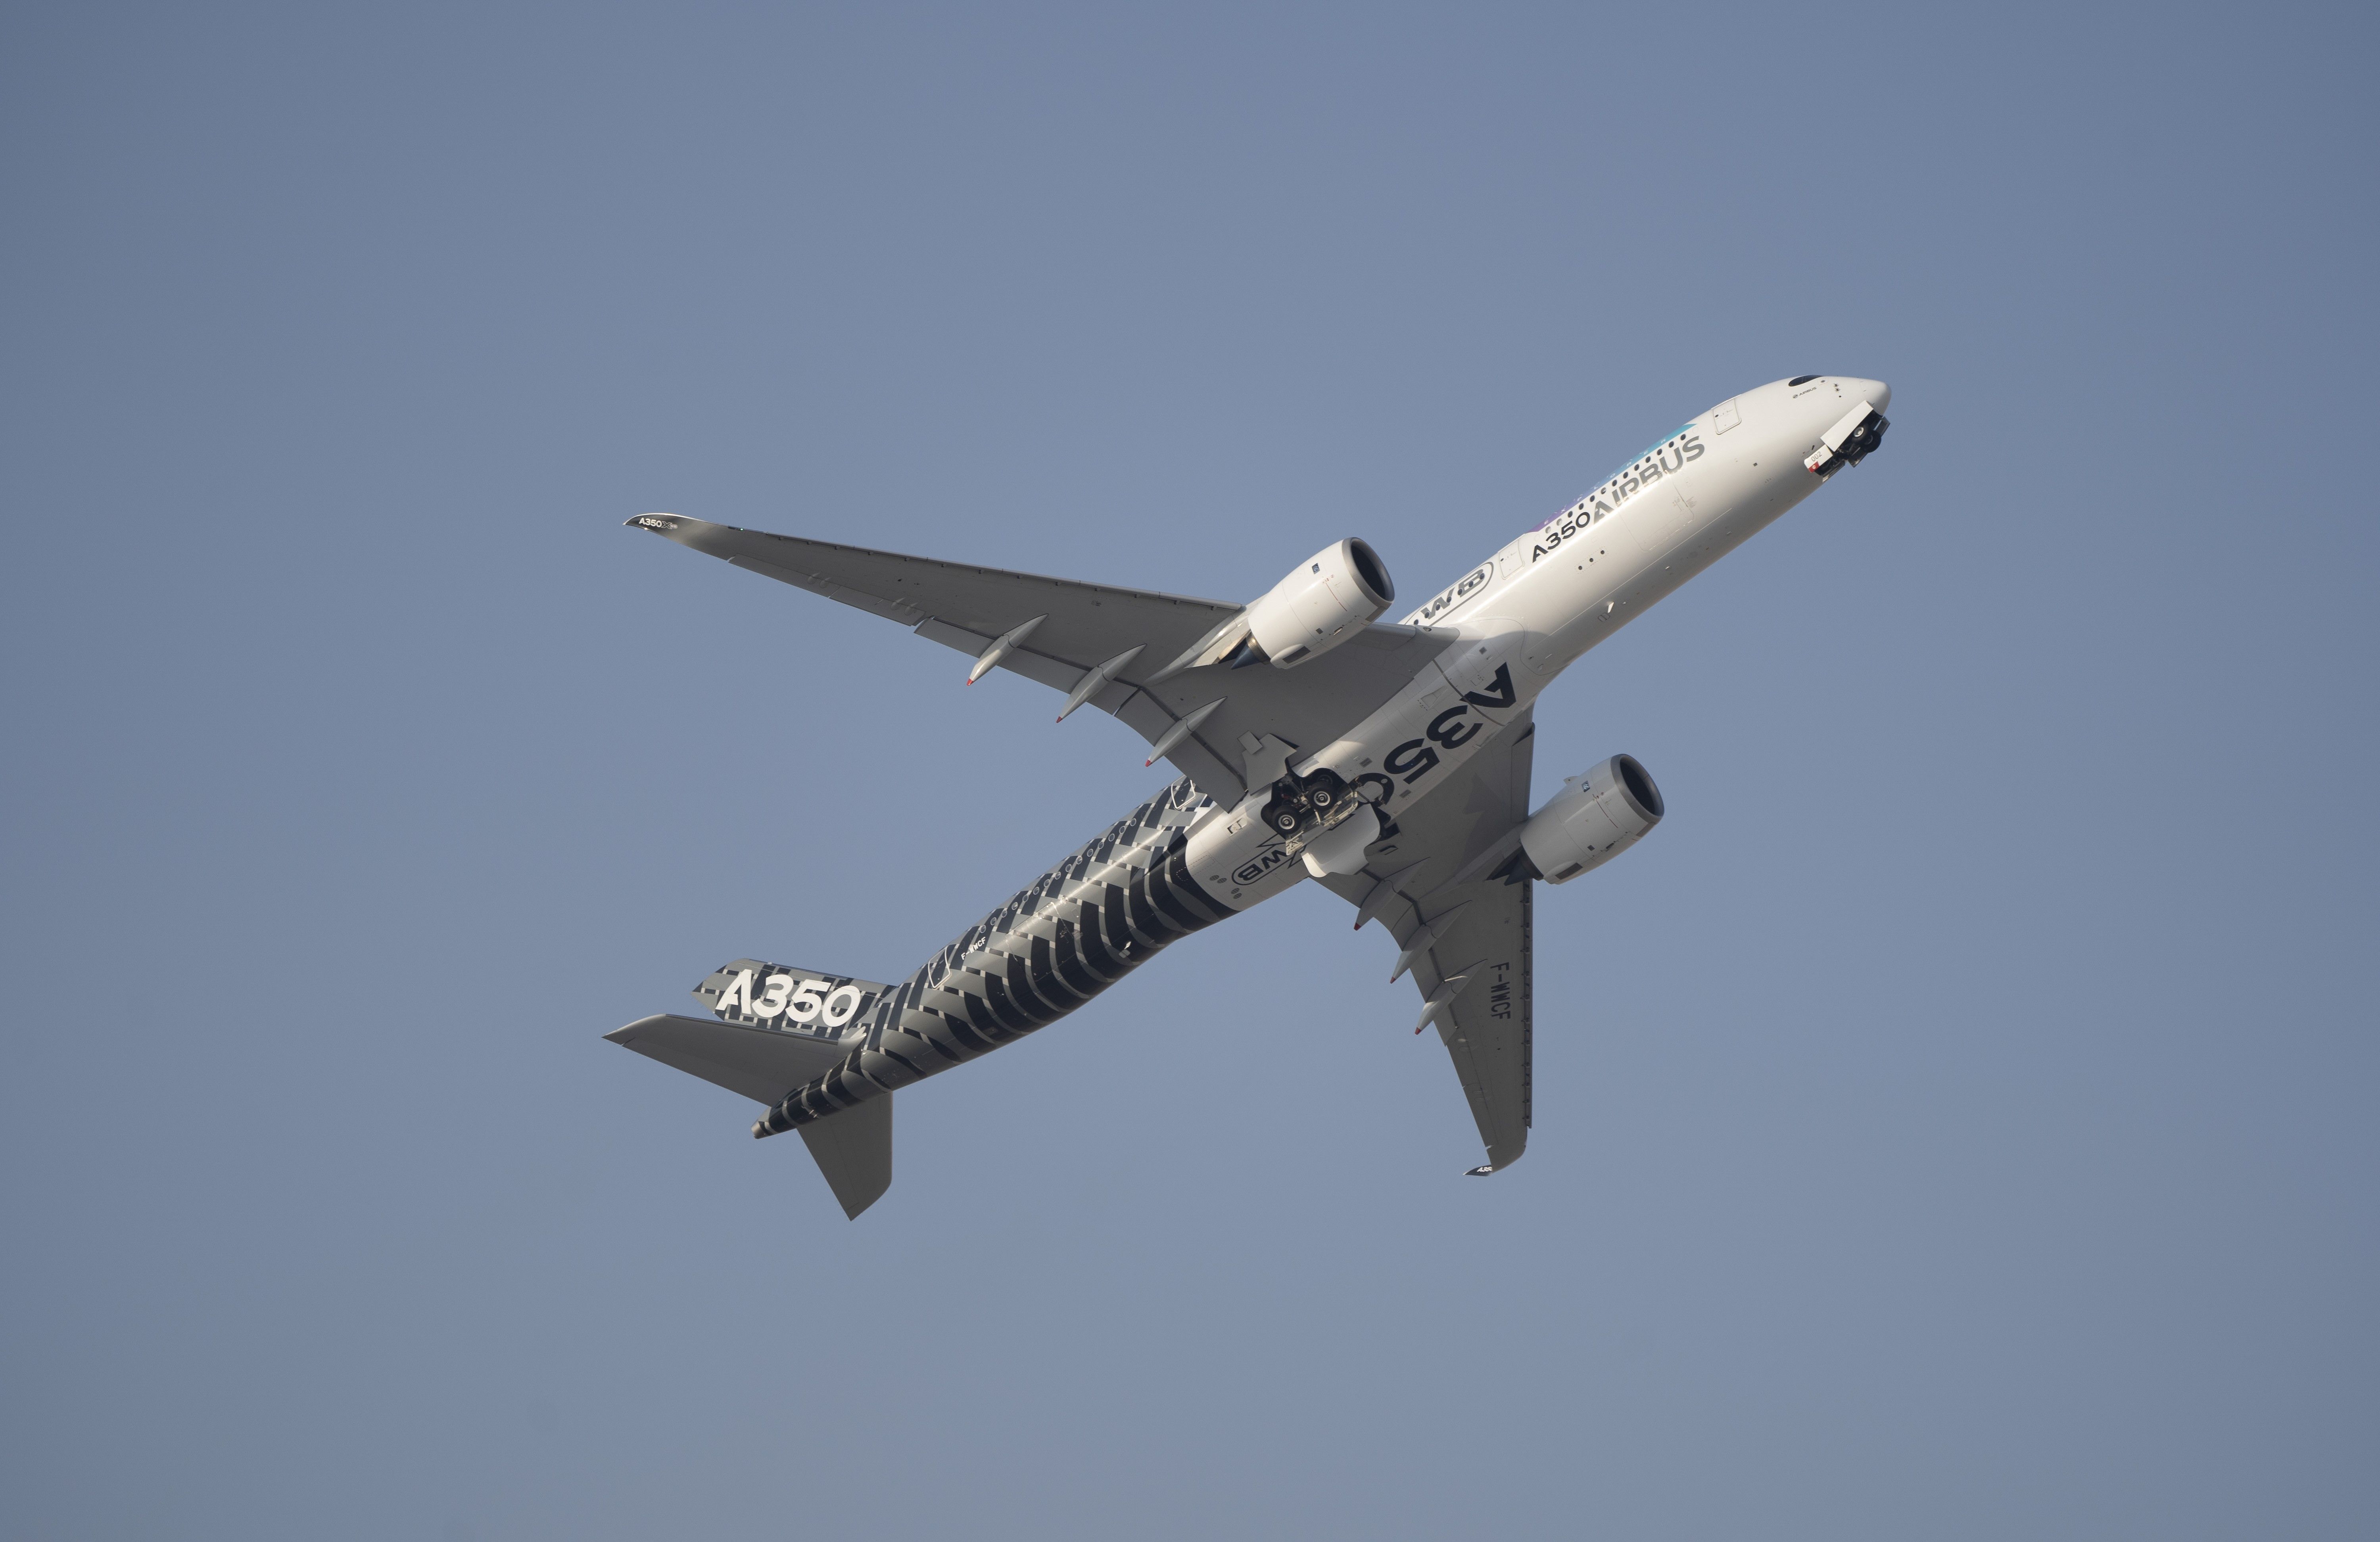 Dubai Airshow 2021 Day 3 - A350 XWB Airbus flying display